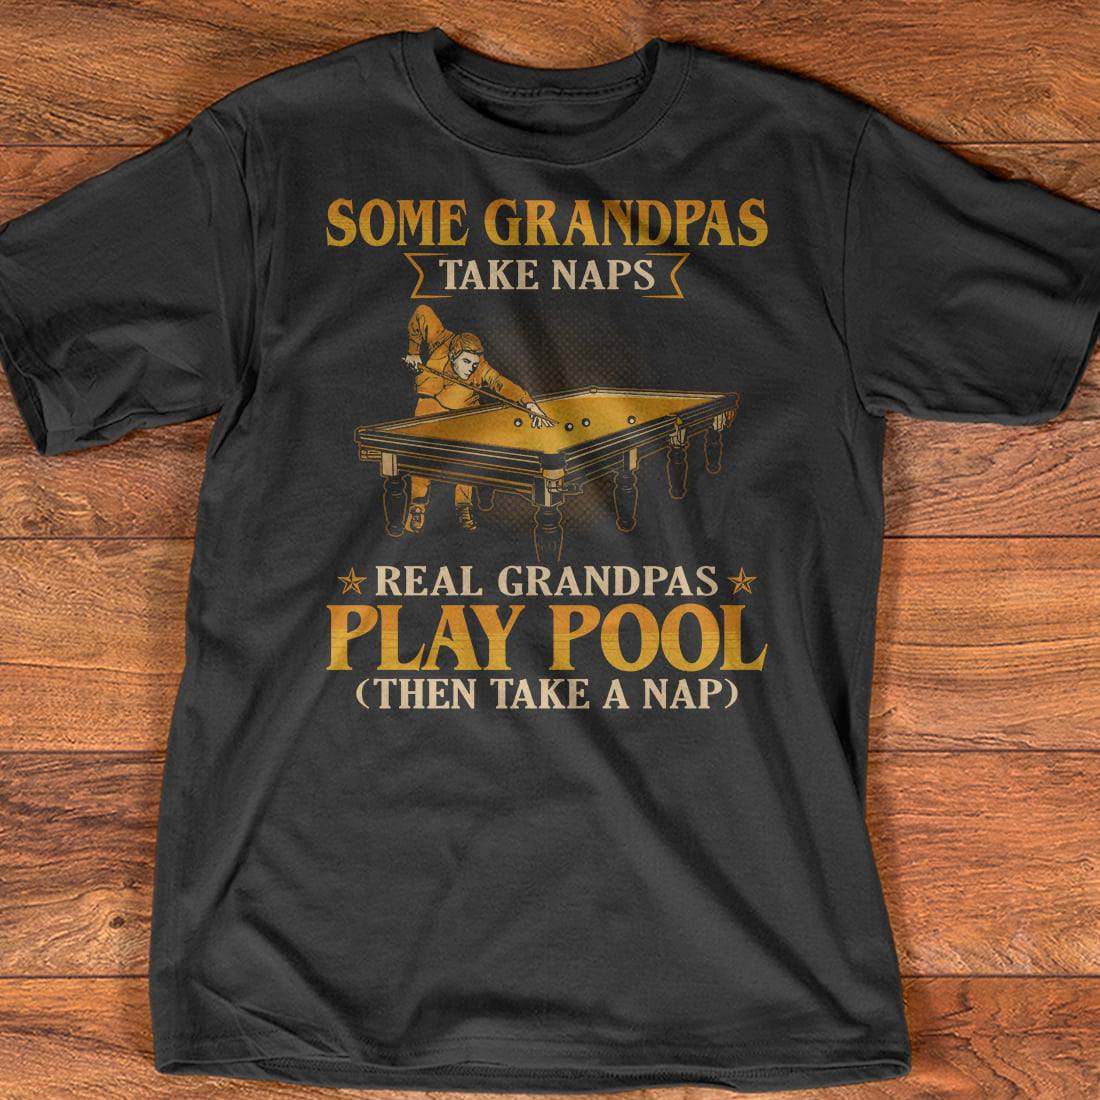 Some grandpas take naps real grandpas play pool - Love playing pool